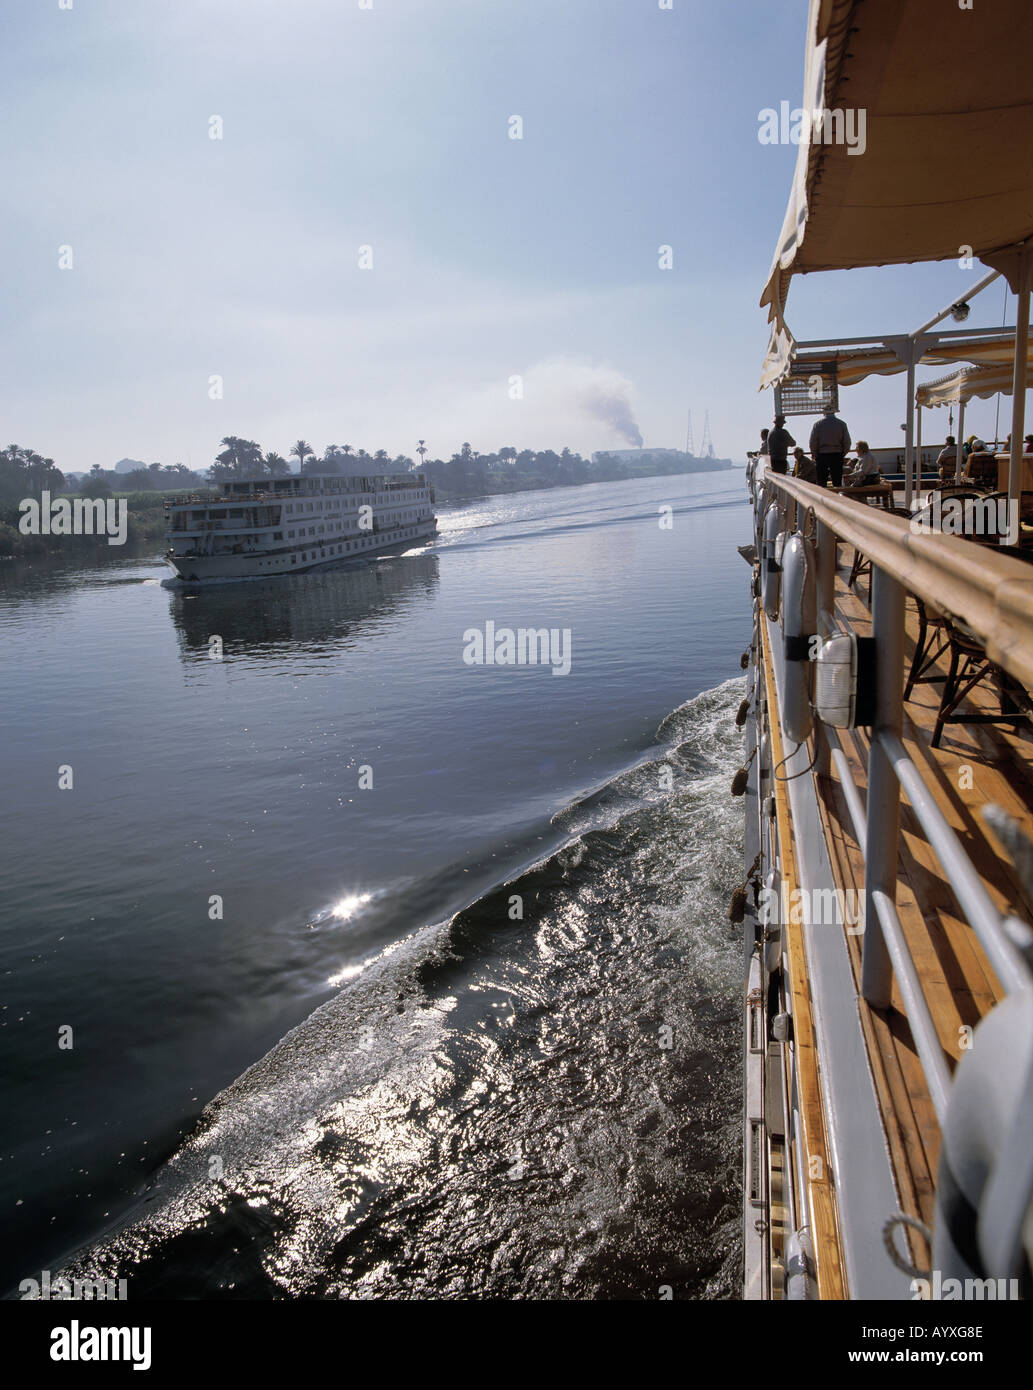 Nilkreuzfahrt, Niluferpromenade, Nillandschaft,zwei Kreuzfahrtschiffe begegnen sich Stock Photo